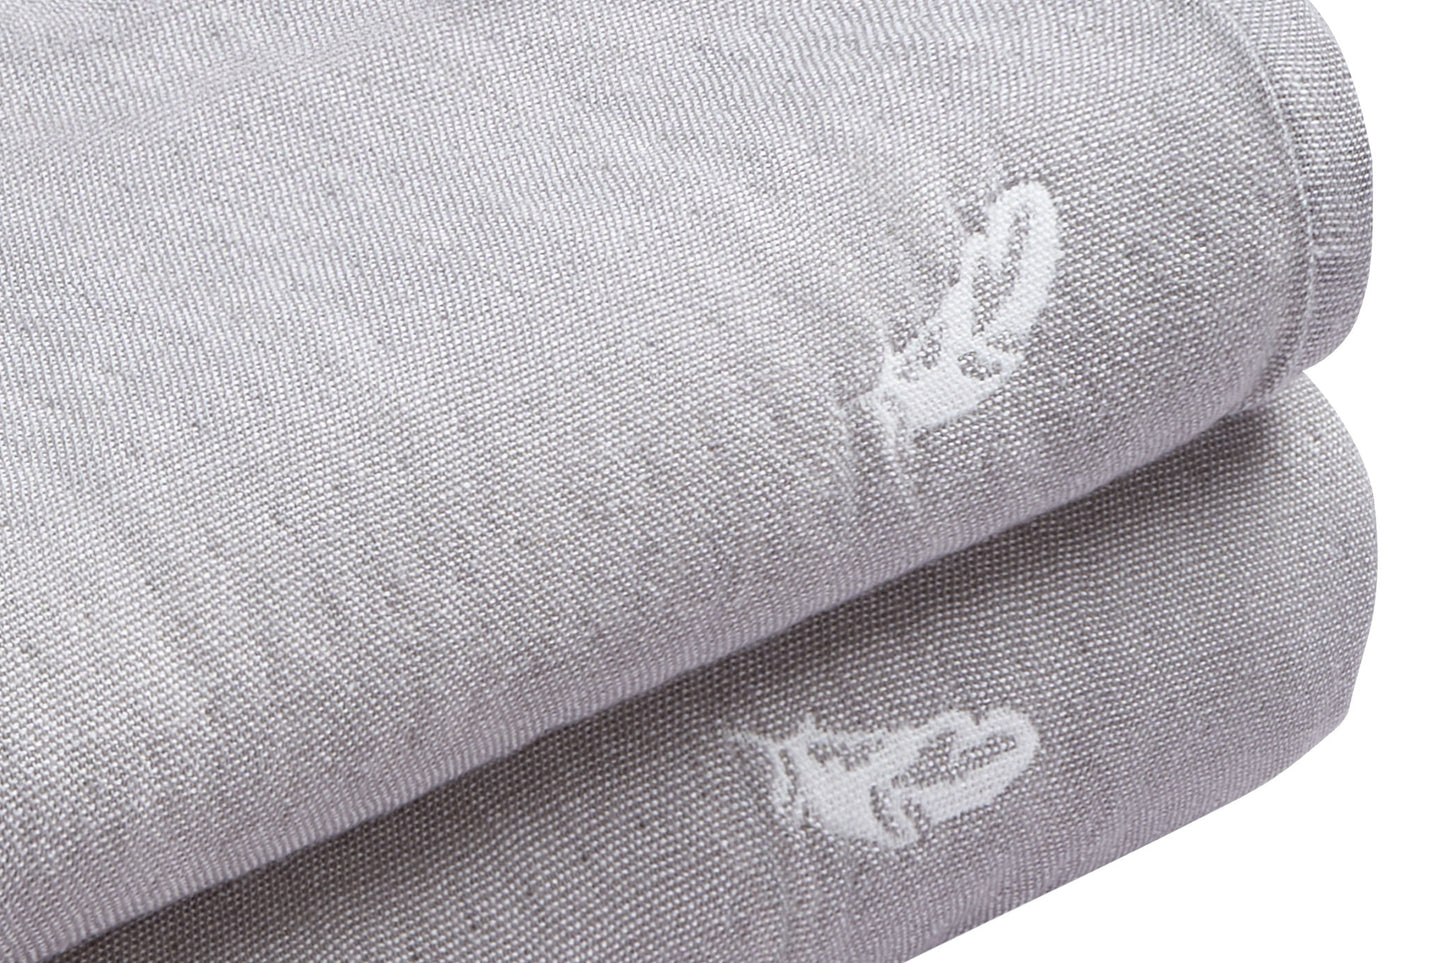 Throw Blanket (Bamboo, Medium) - Feather Grey